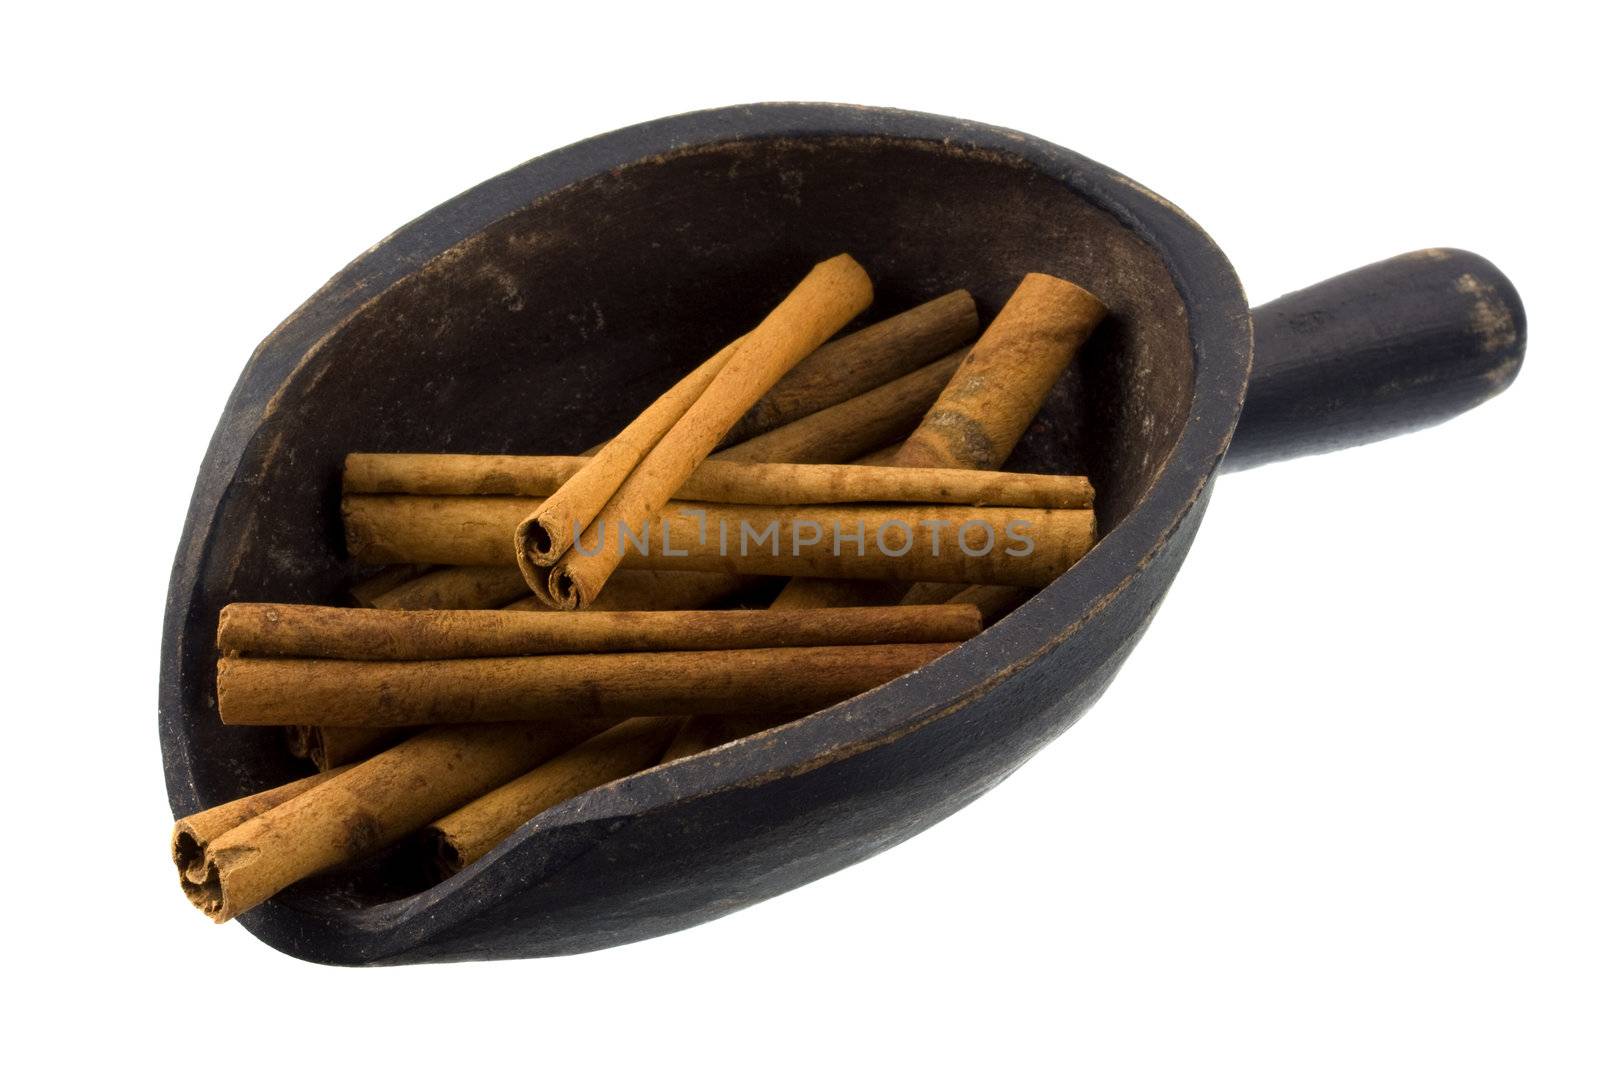 scoop of cinnamon sticks by PixelsAway